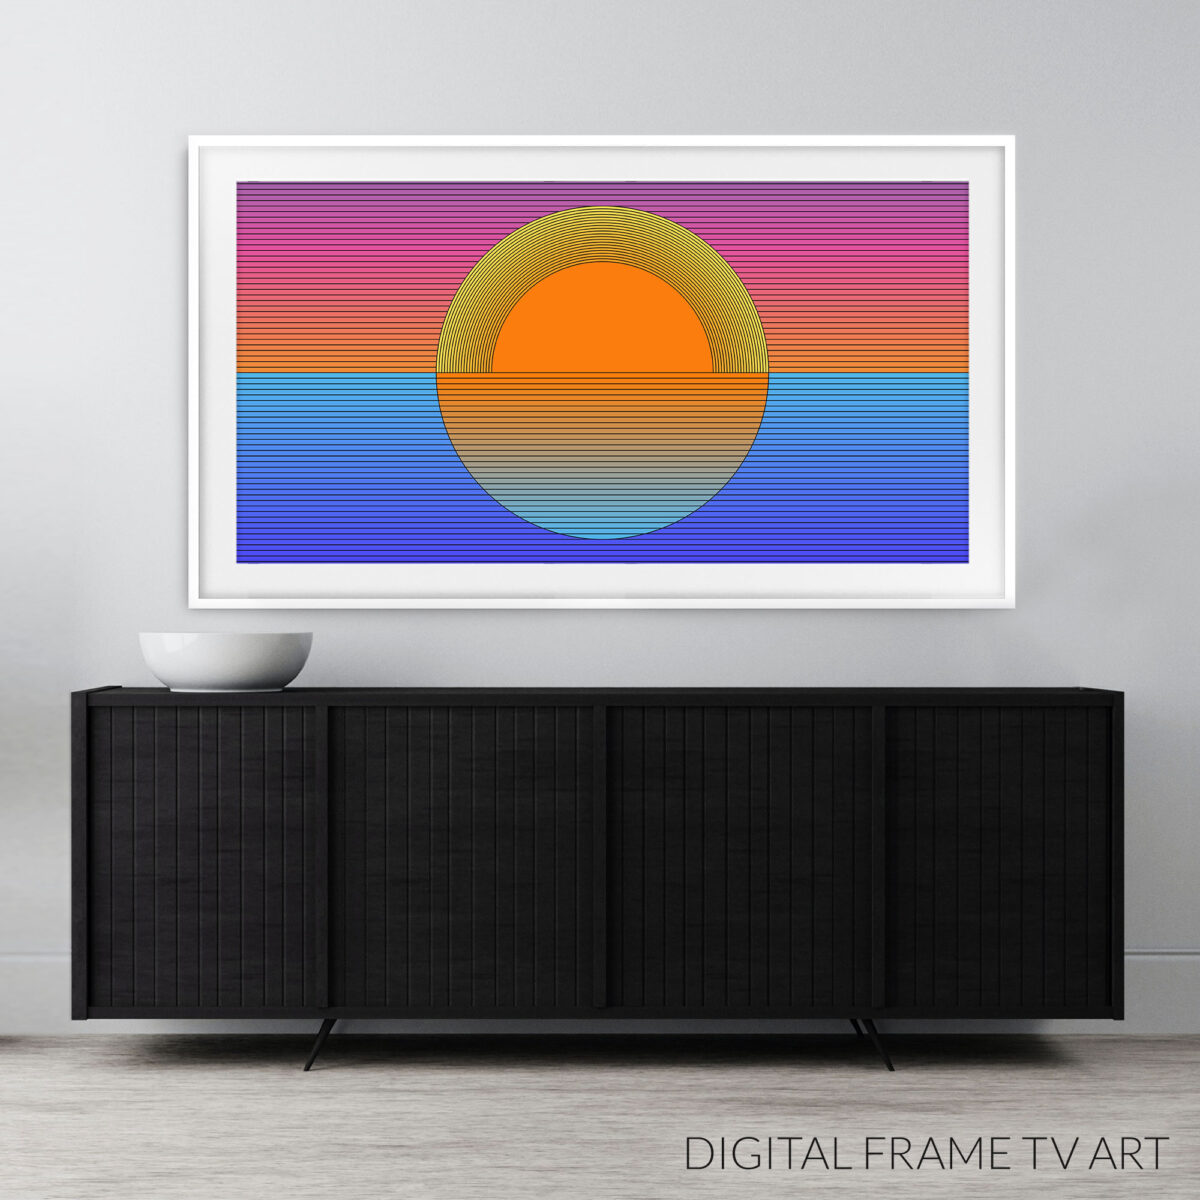 Sunset digital wallpaper design on a large screen television.